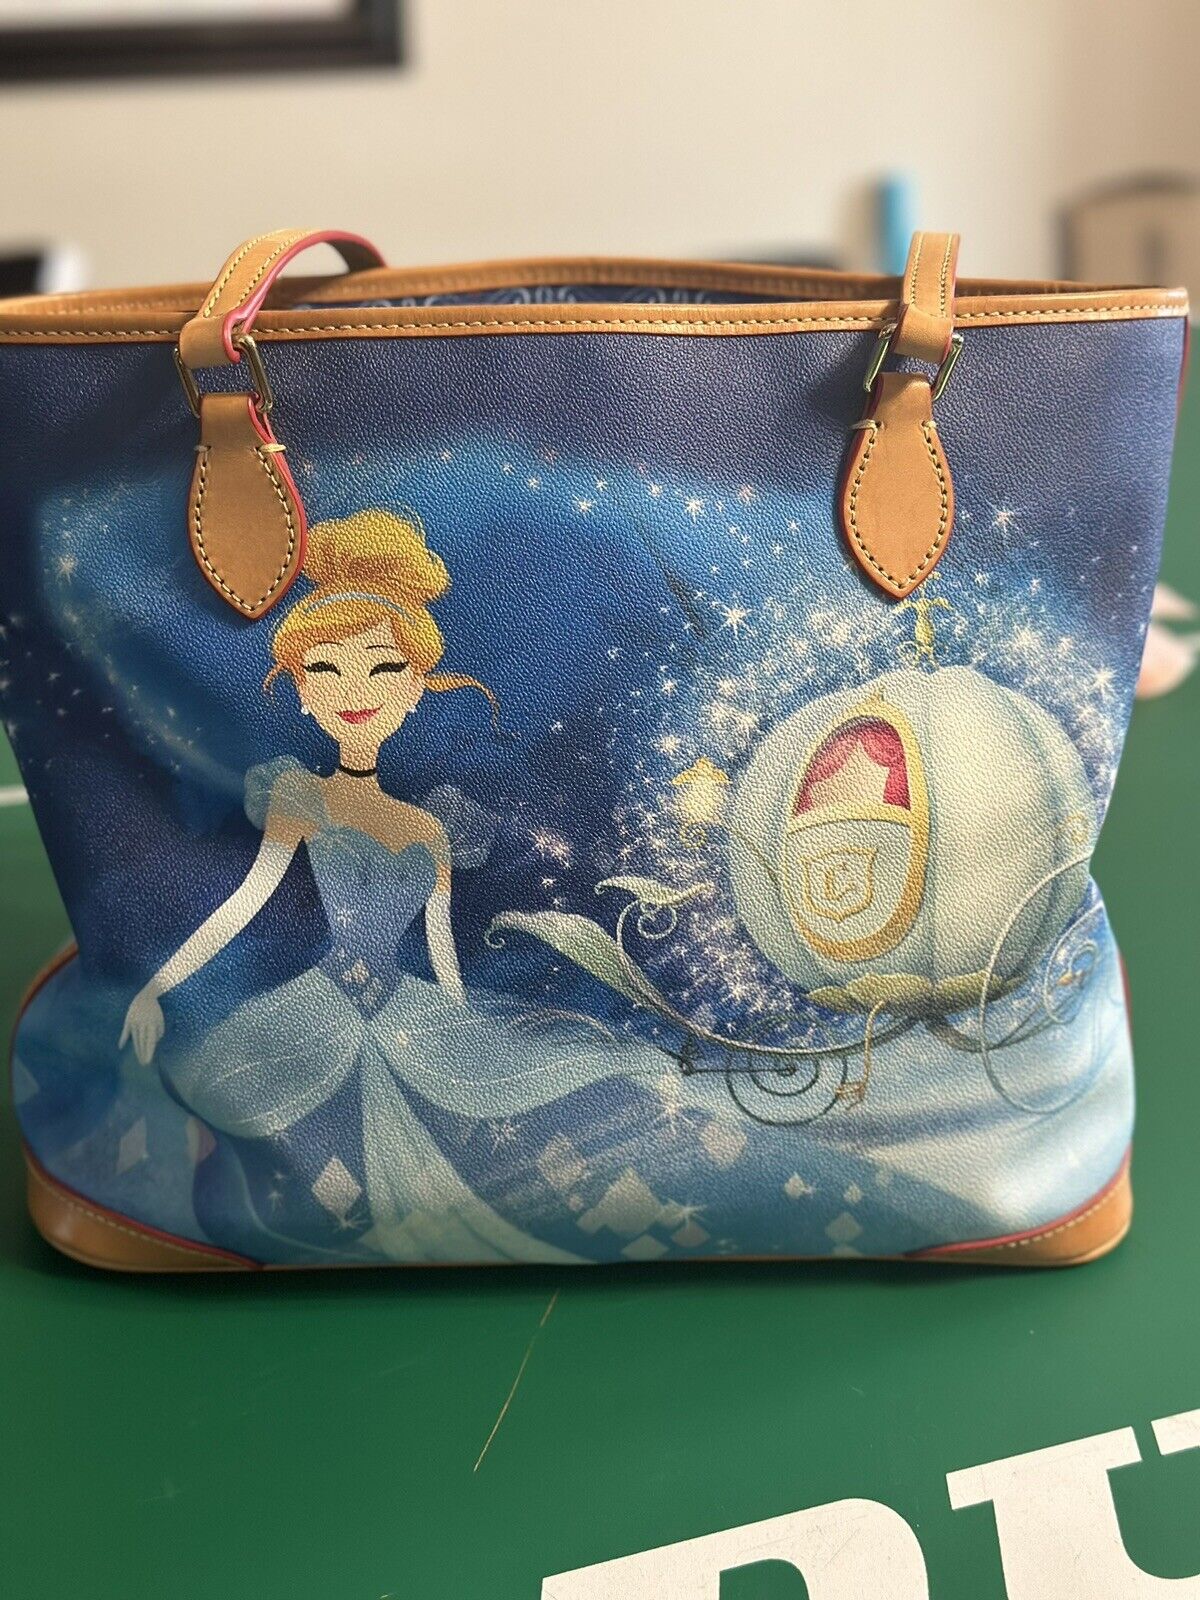 Used Disney Dooney & Bourke Cinderella Carriage Shopper Tote Bag Purse